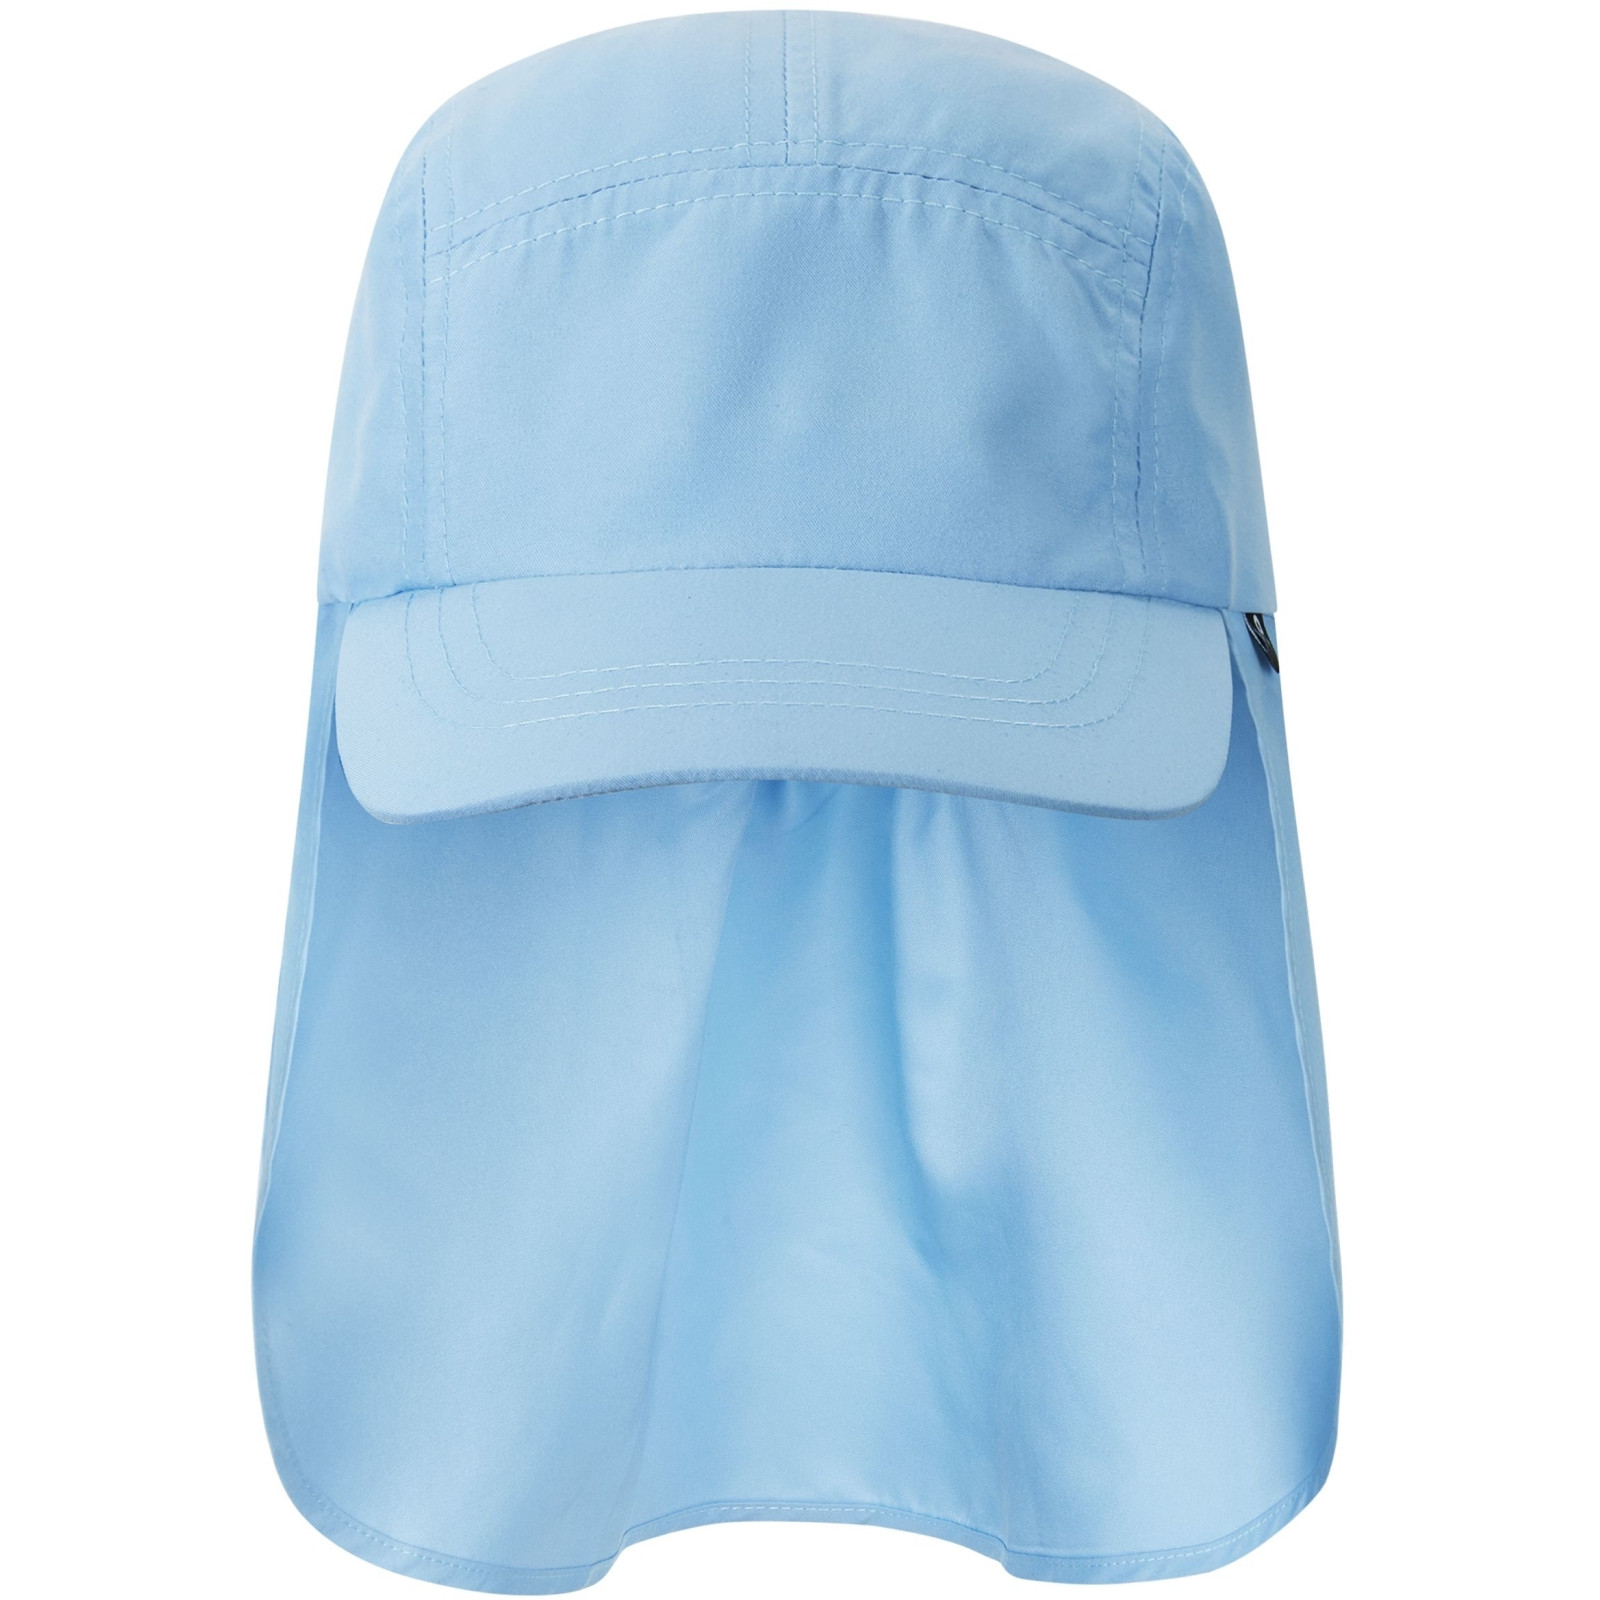 Dětský klobouk Reima Biitsi Obvod hlavy: 52 cm / Barva: modrá